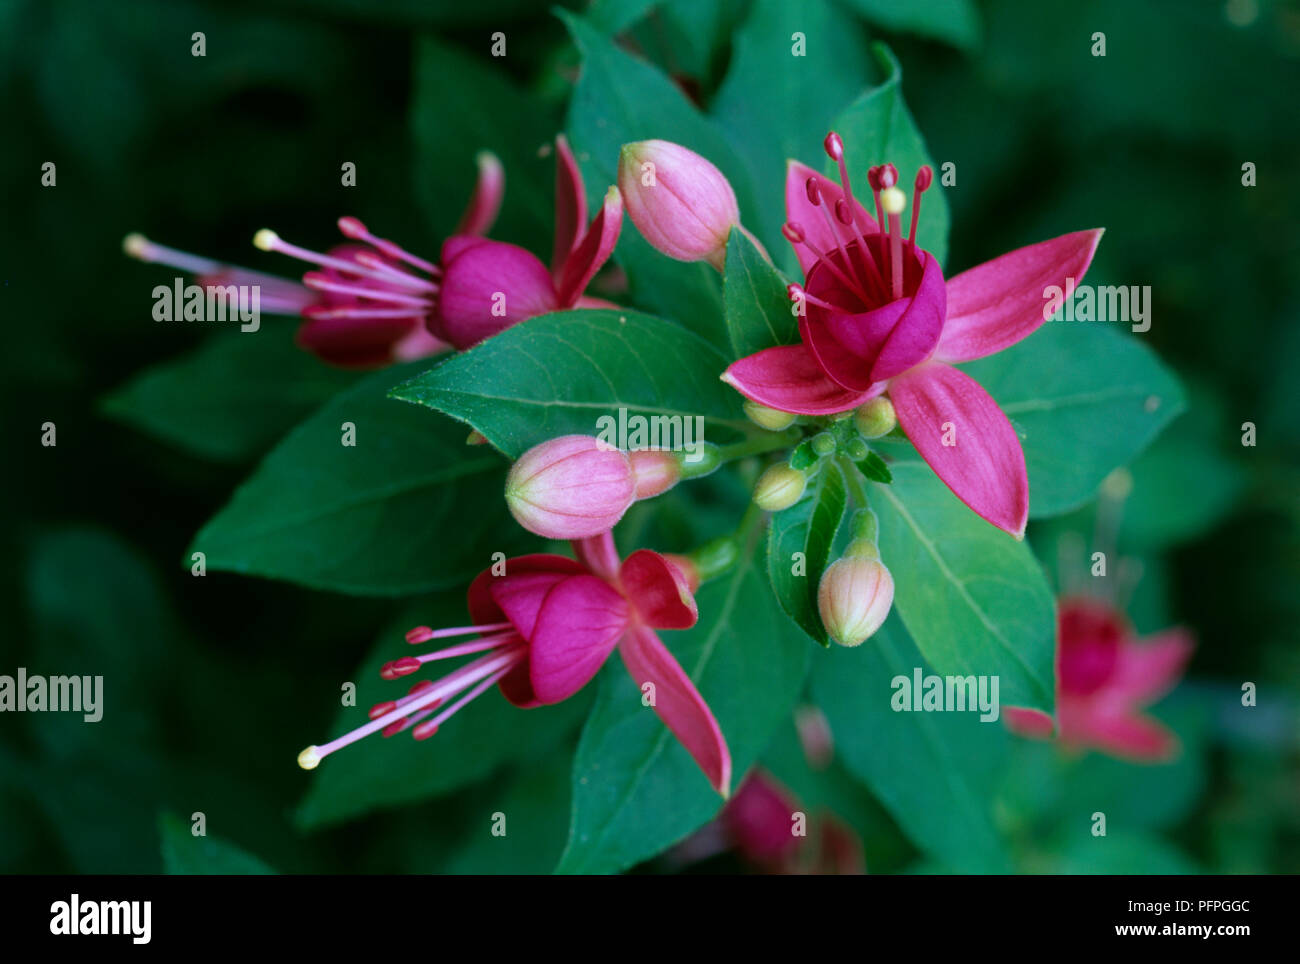 Fuchsia 'Cherry', rosa Blüten, Knospen entrollt, und grüne Blätter, close-up Stockfoto